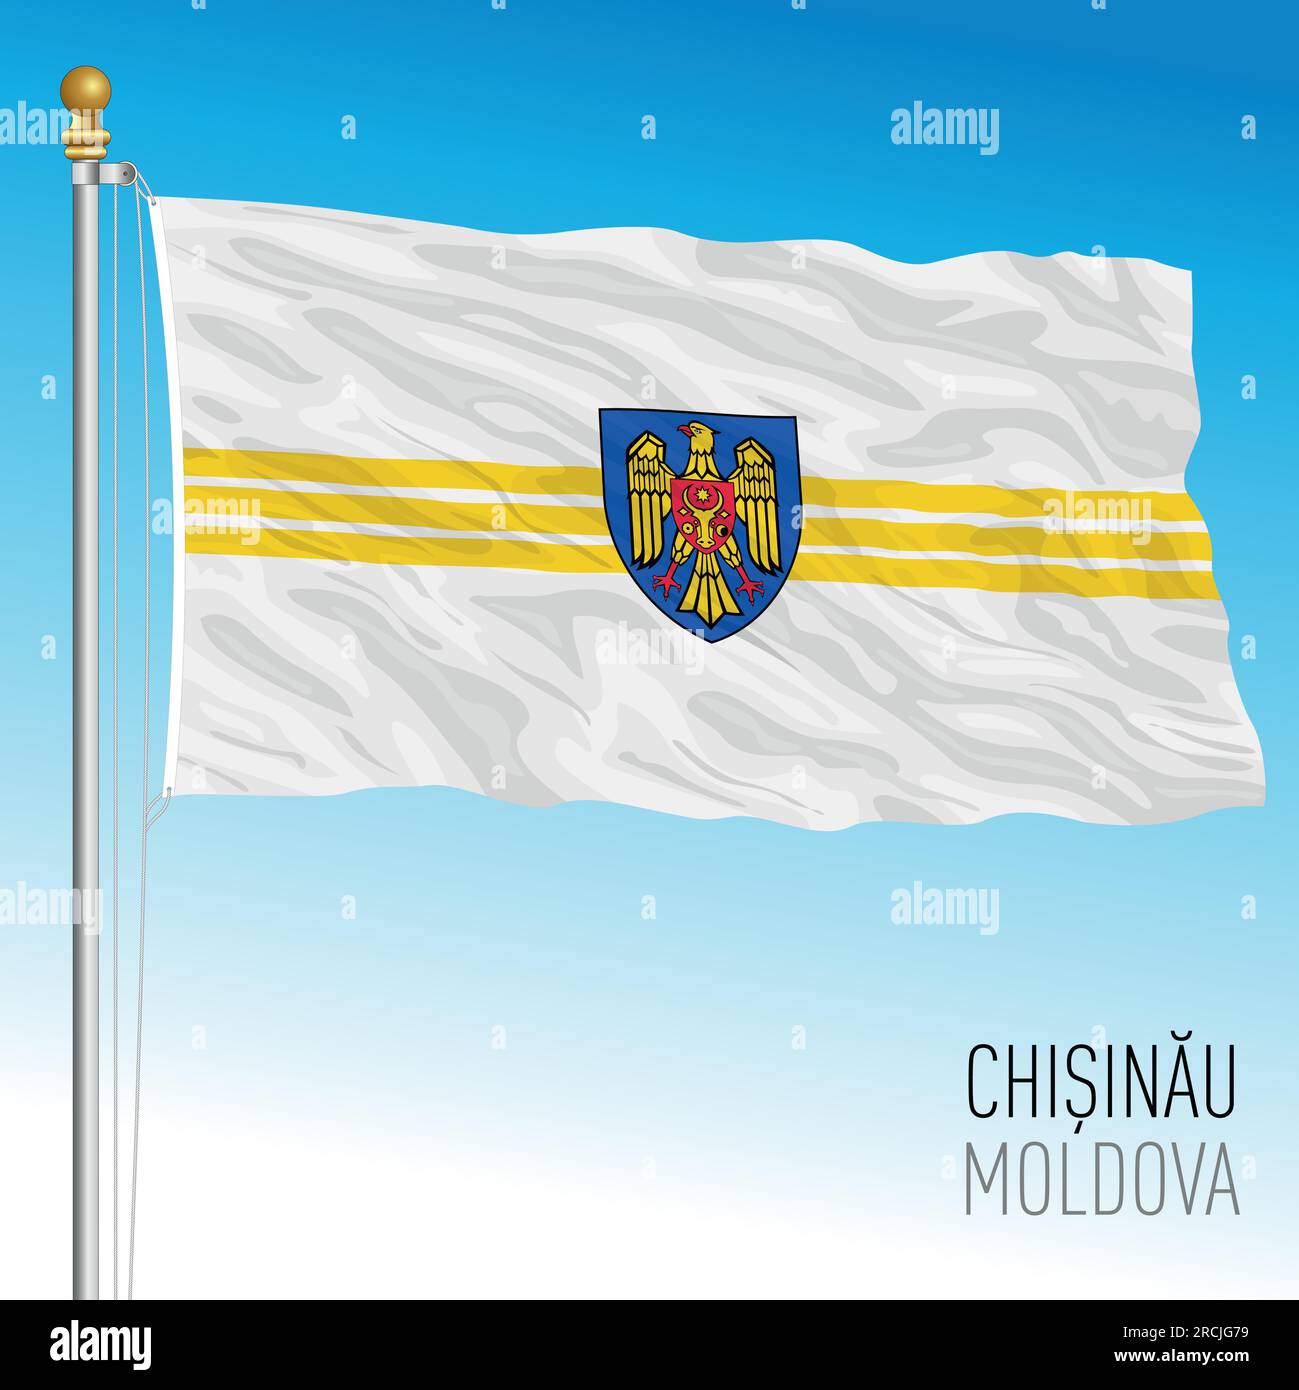 Chisinau city pennant flag, Republic of Moldova, european country, vector illustration Stock Vector